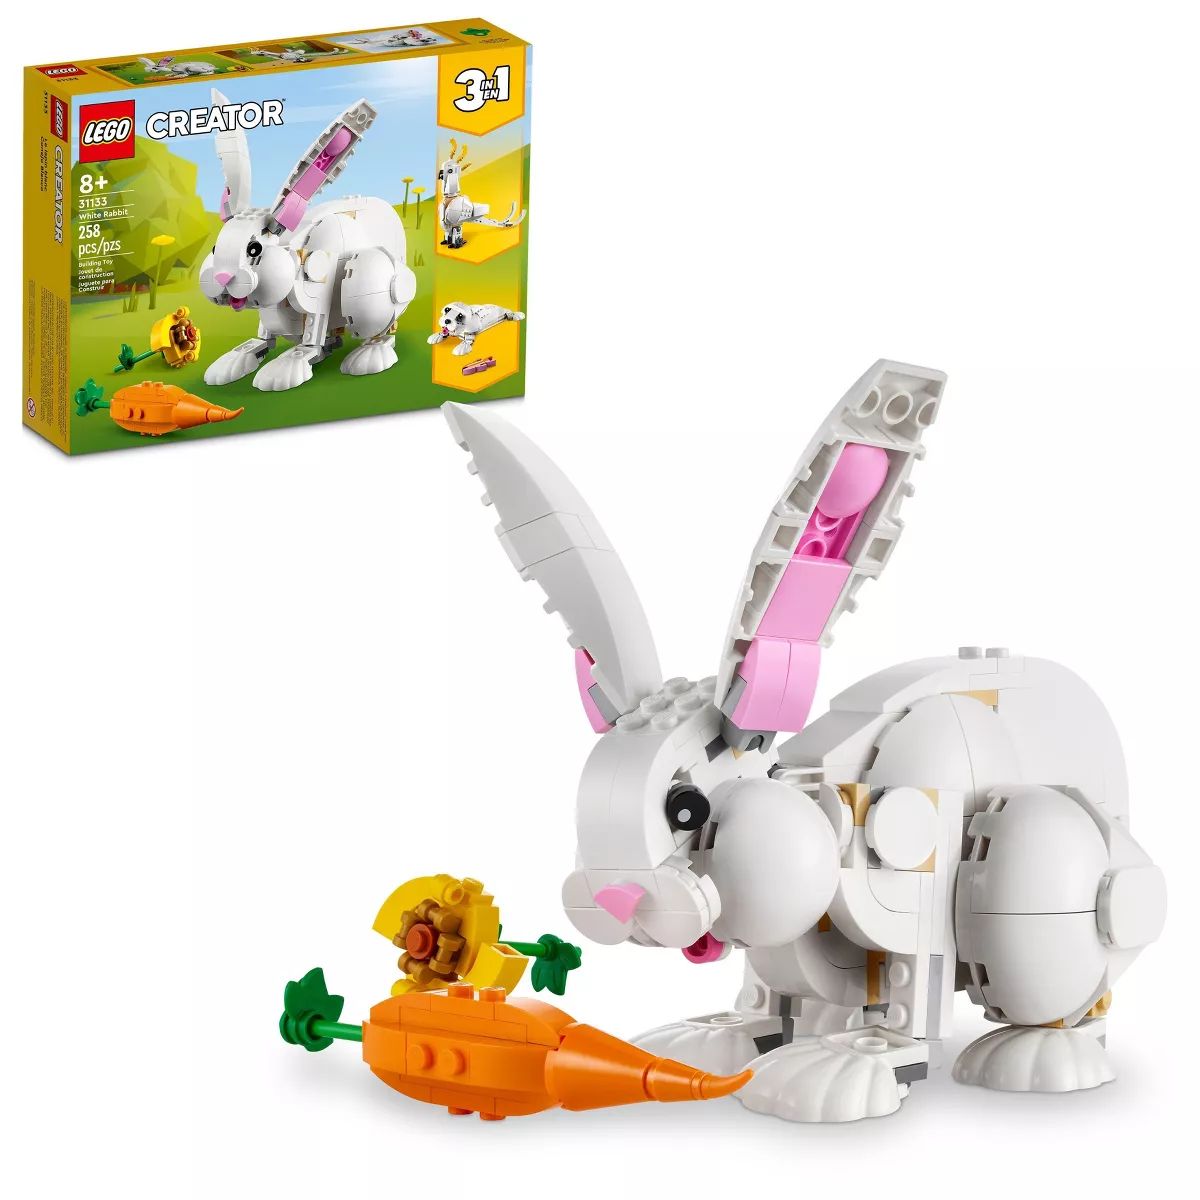 LEGO Creator 3in1 White Rabbit Toy Animal Figures Set 31133 | Target